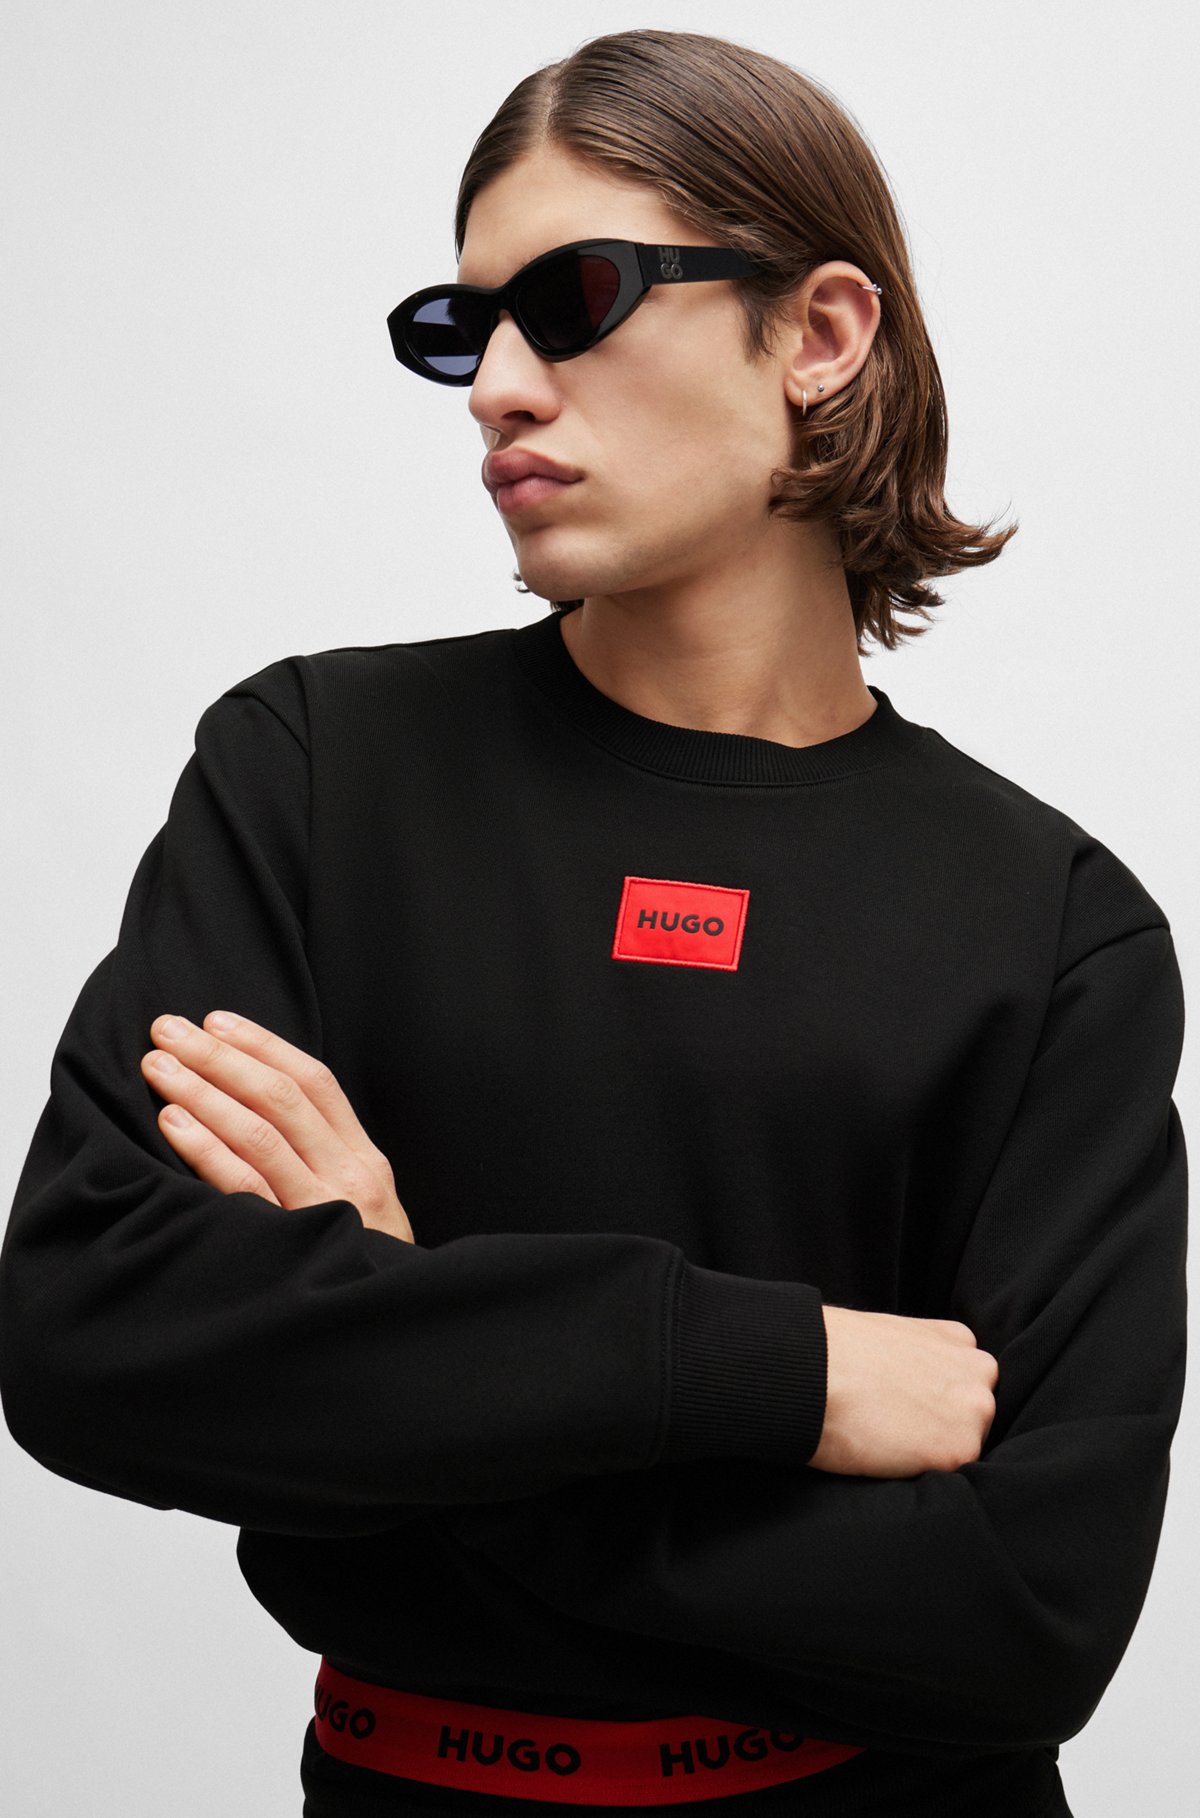 Cotton-terry regular-fit sweatshirt with logo label, Black